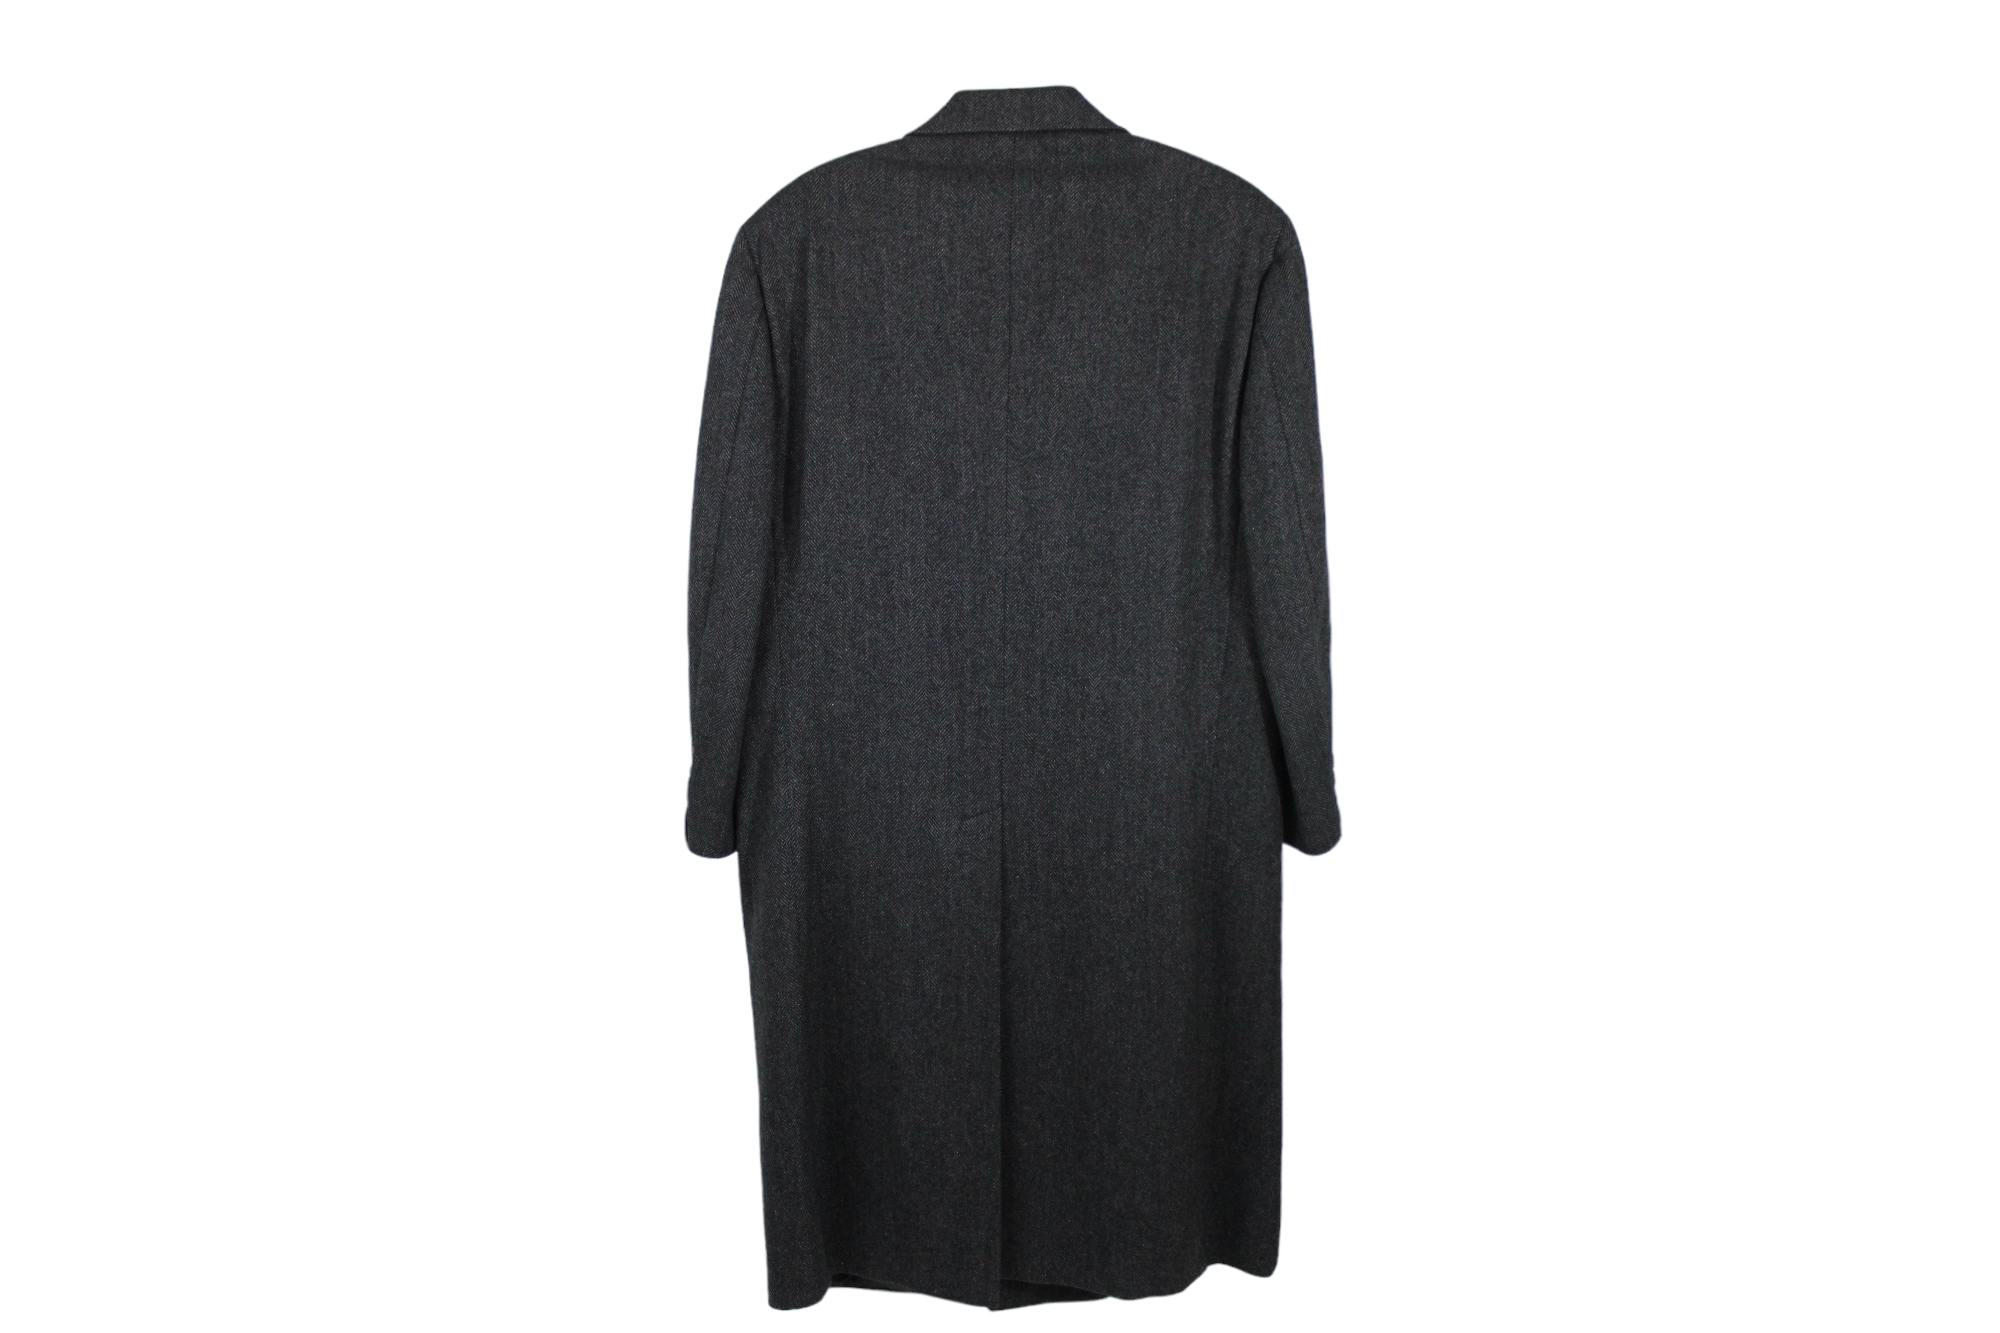 Burberry's Gray Wool Trench Coat